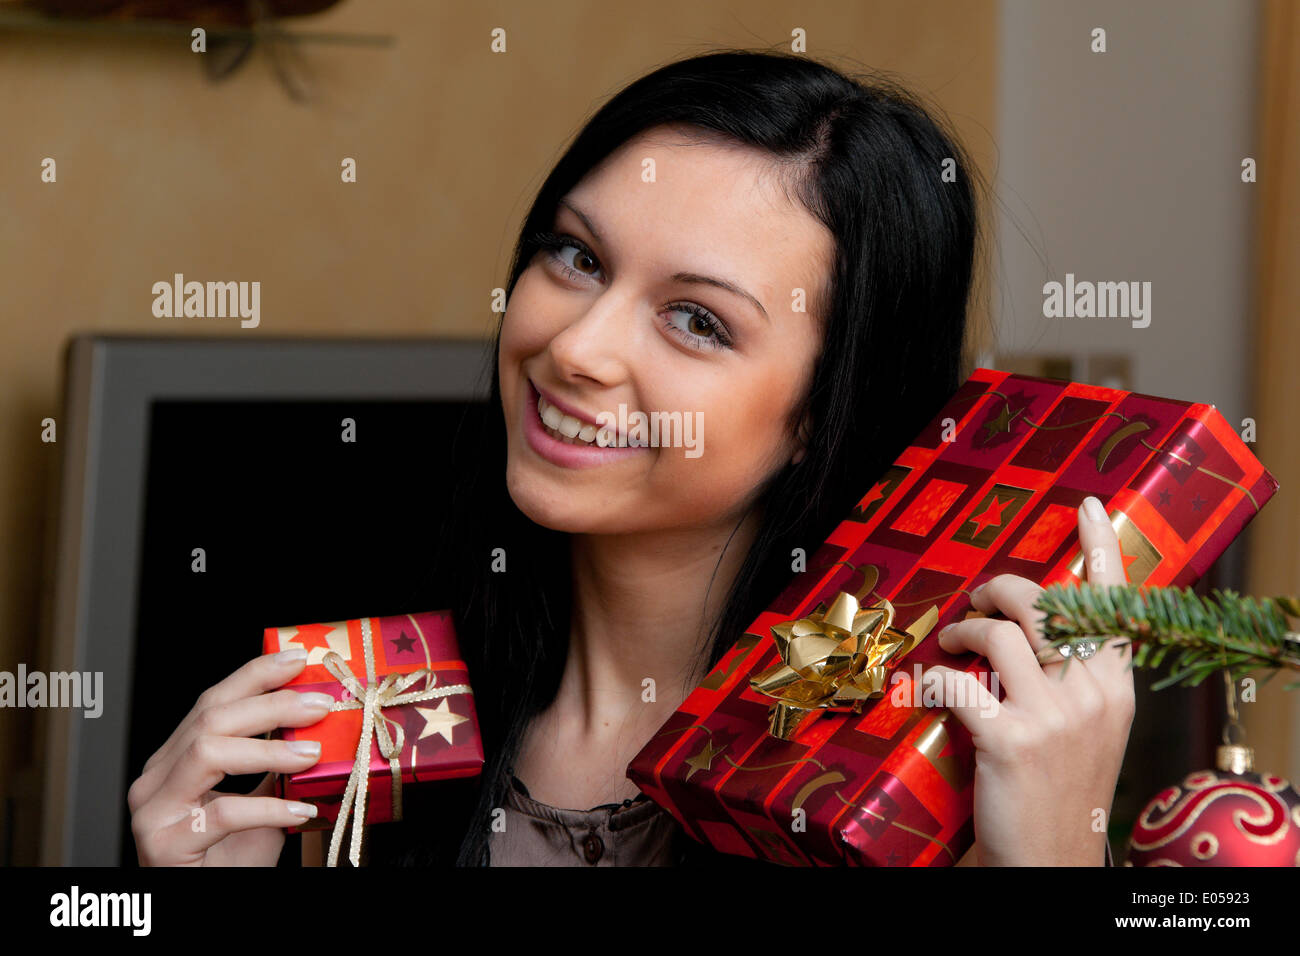 Young woman with Christmas presents, Junge Frau mit Weihnachtsgeschenken Stock Photo